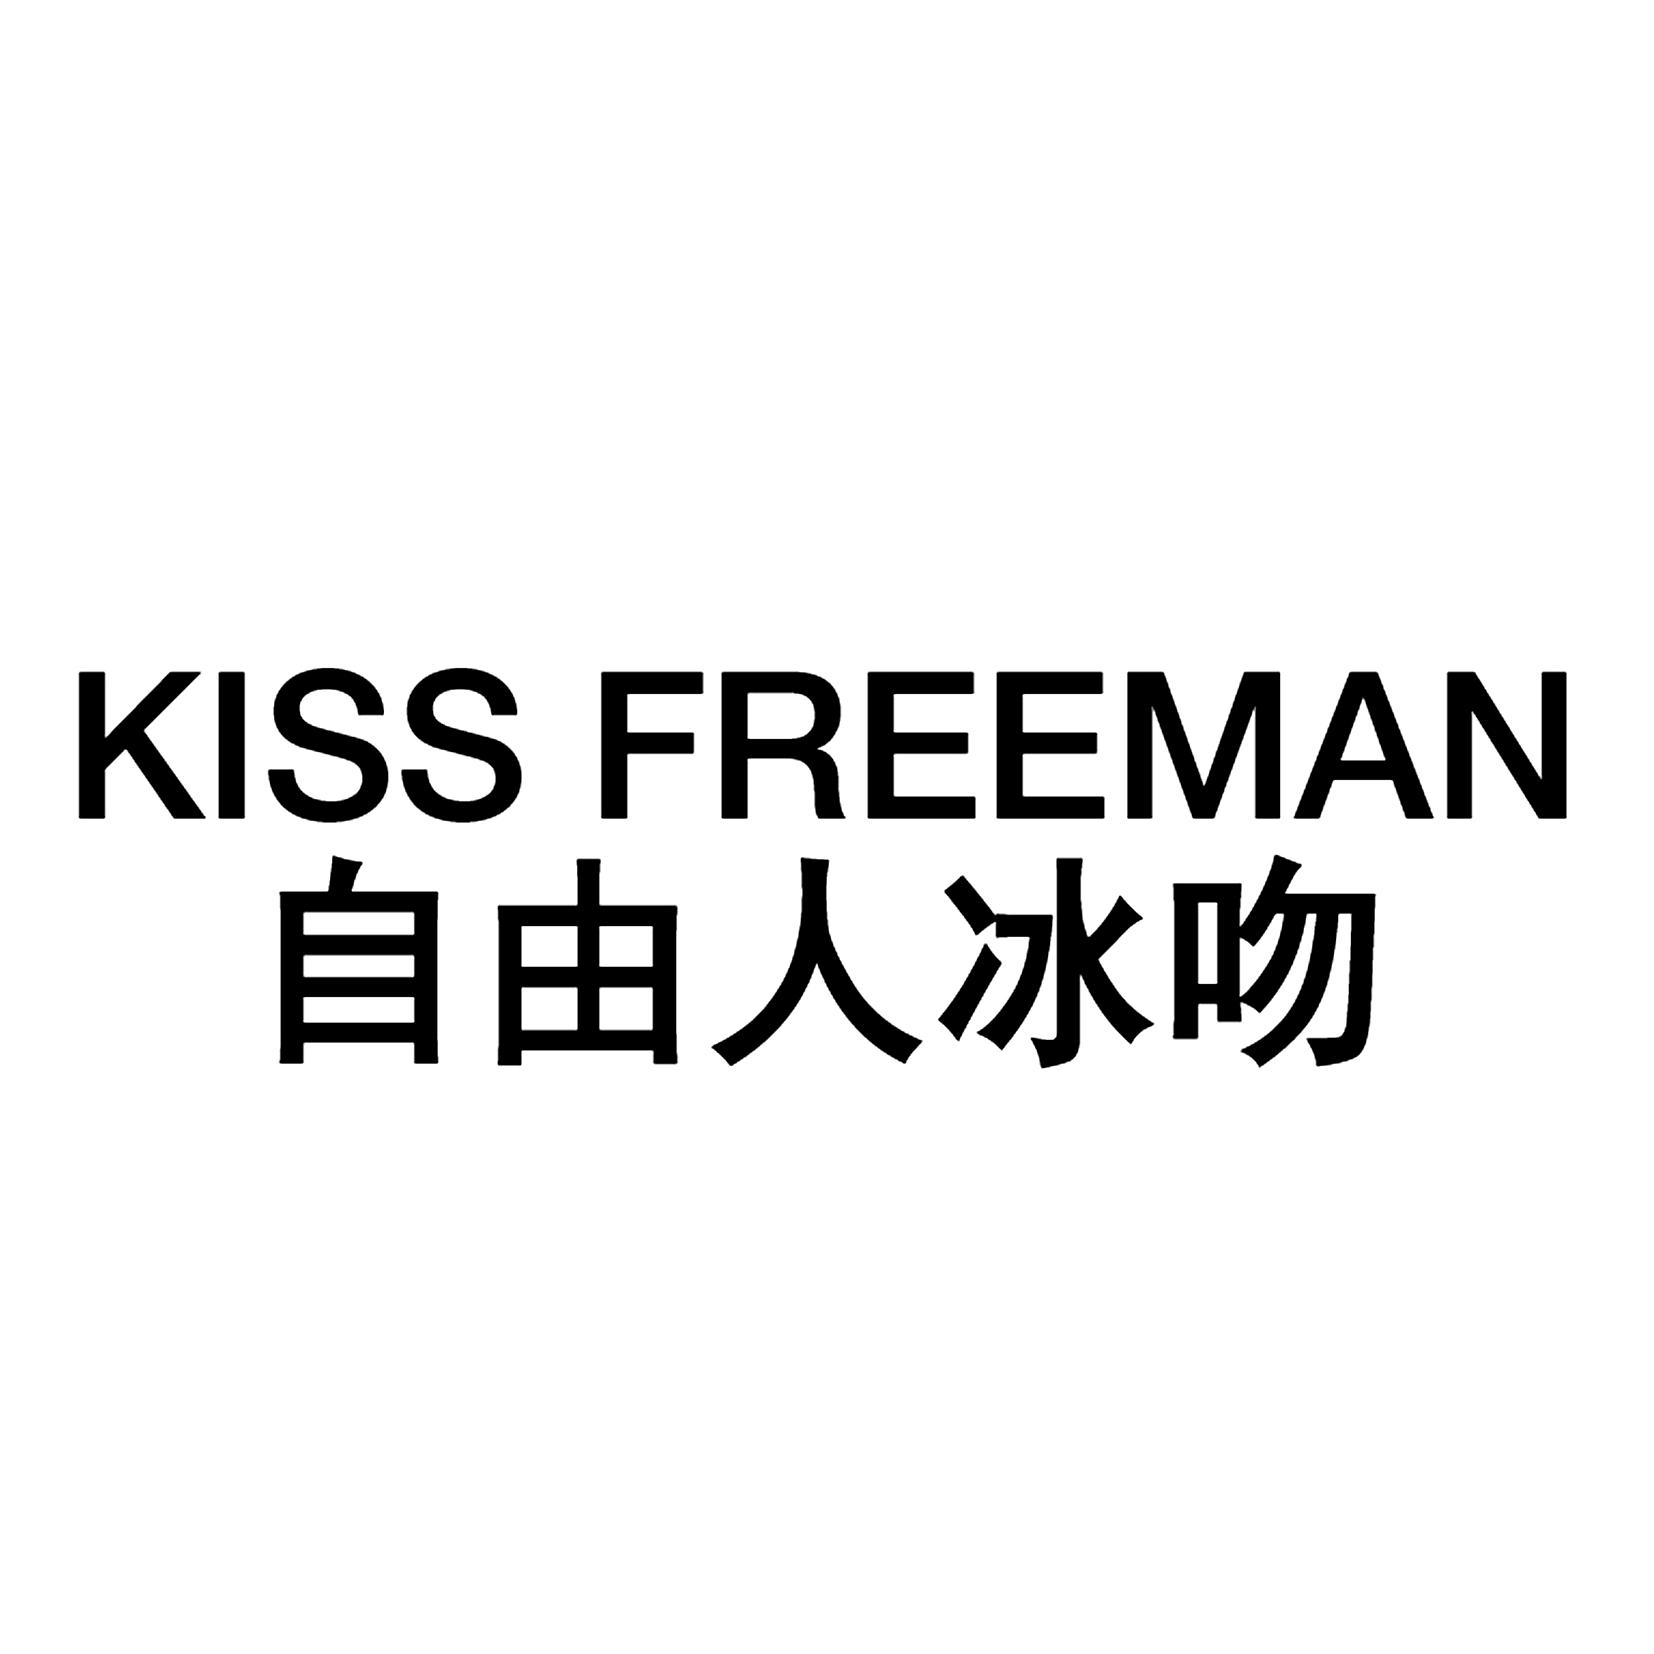 自由人冰吻  KISS FREEMAN商标转让